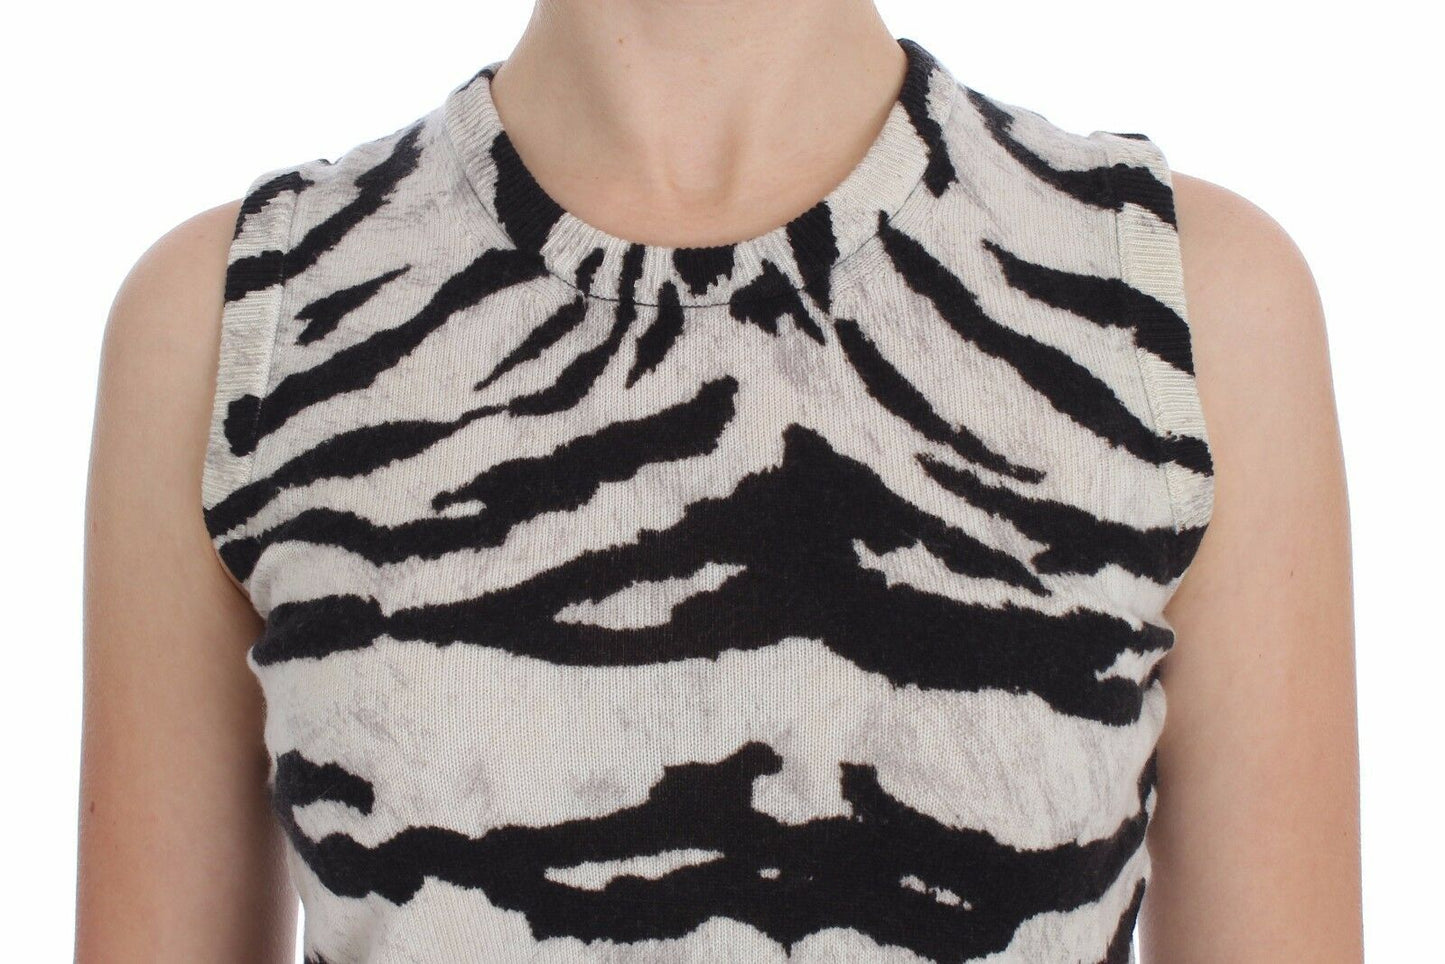 Zebra 100% Cashmere Knit Top Vest Tank Top